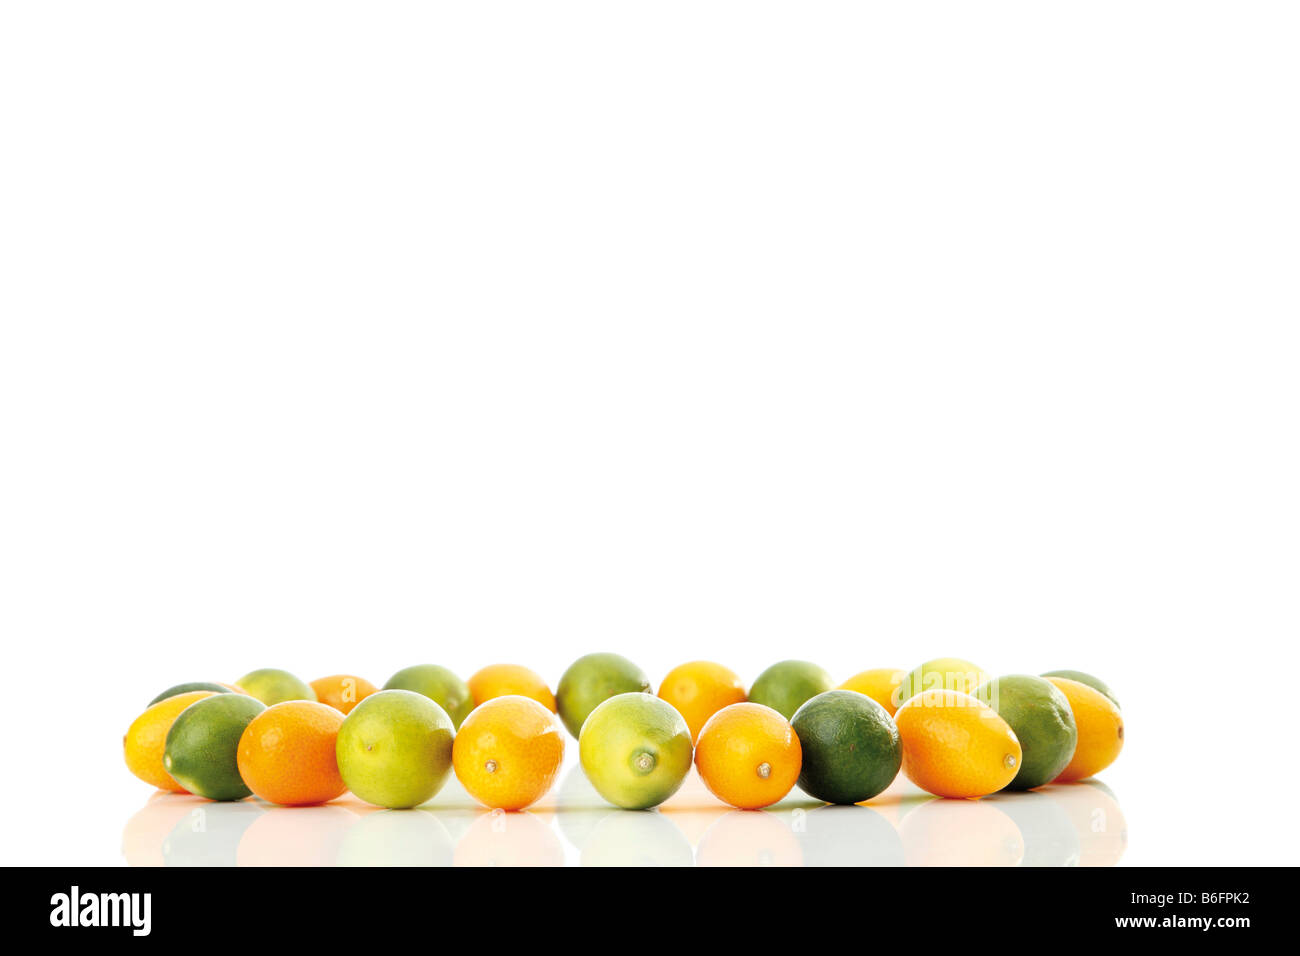 Kumquat (Fortunella) ou Cumquats et Limequat (Citrus x floridana), dans un cercle Banque D'Images